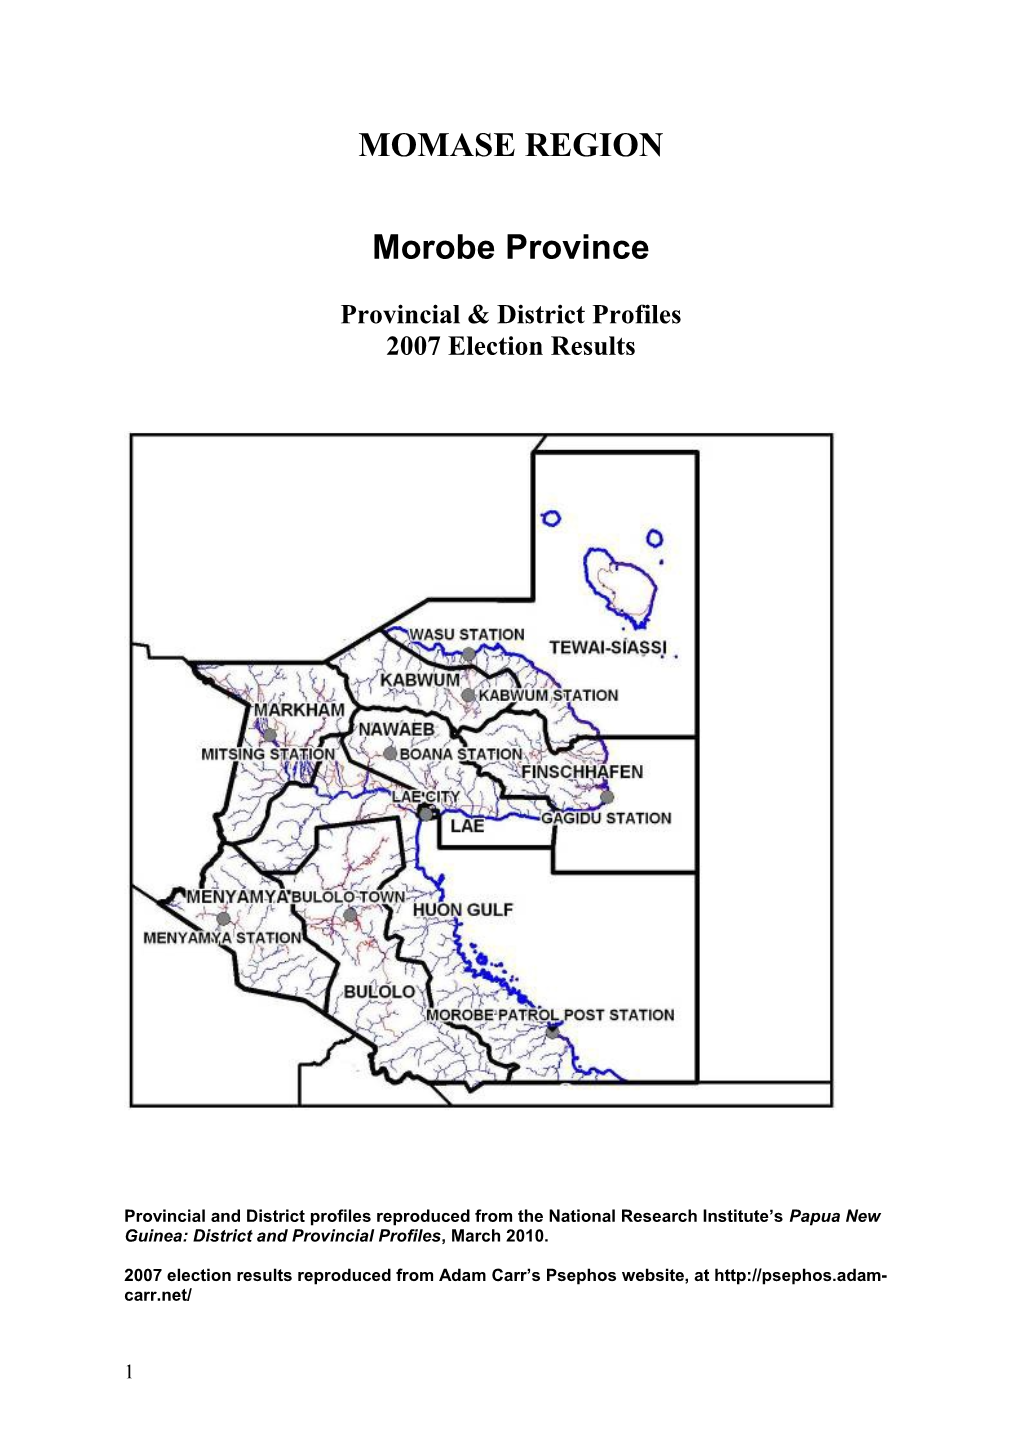 Provincial & District Profiles